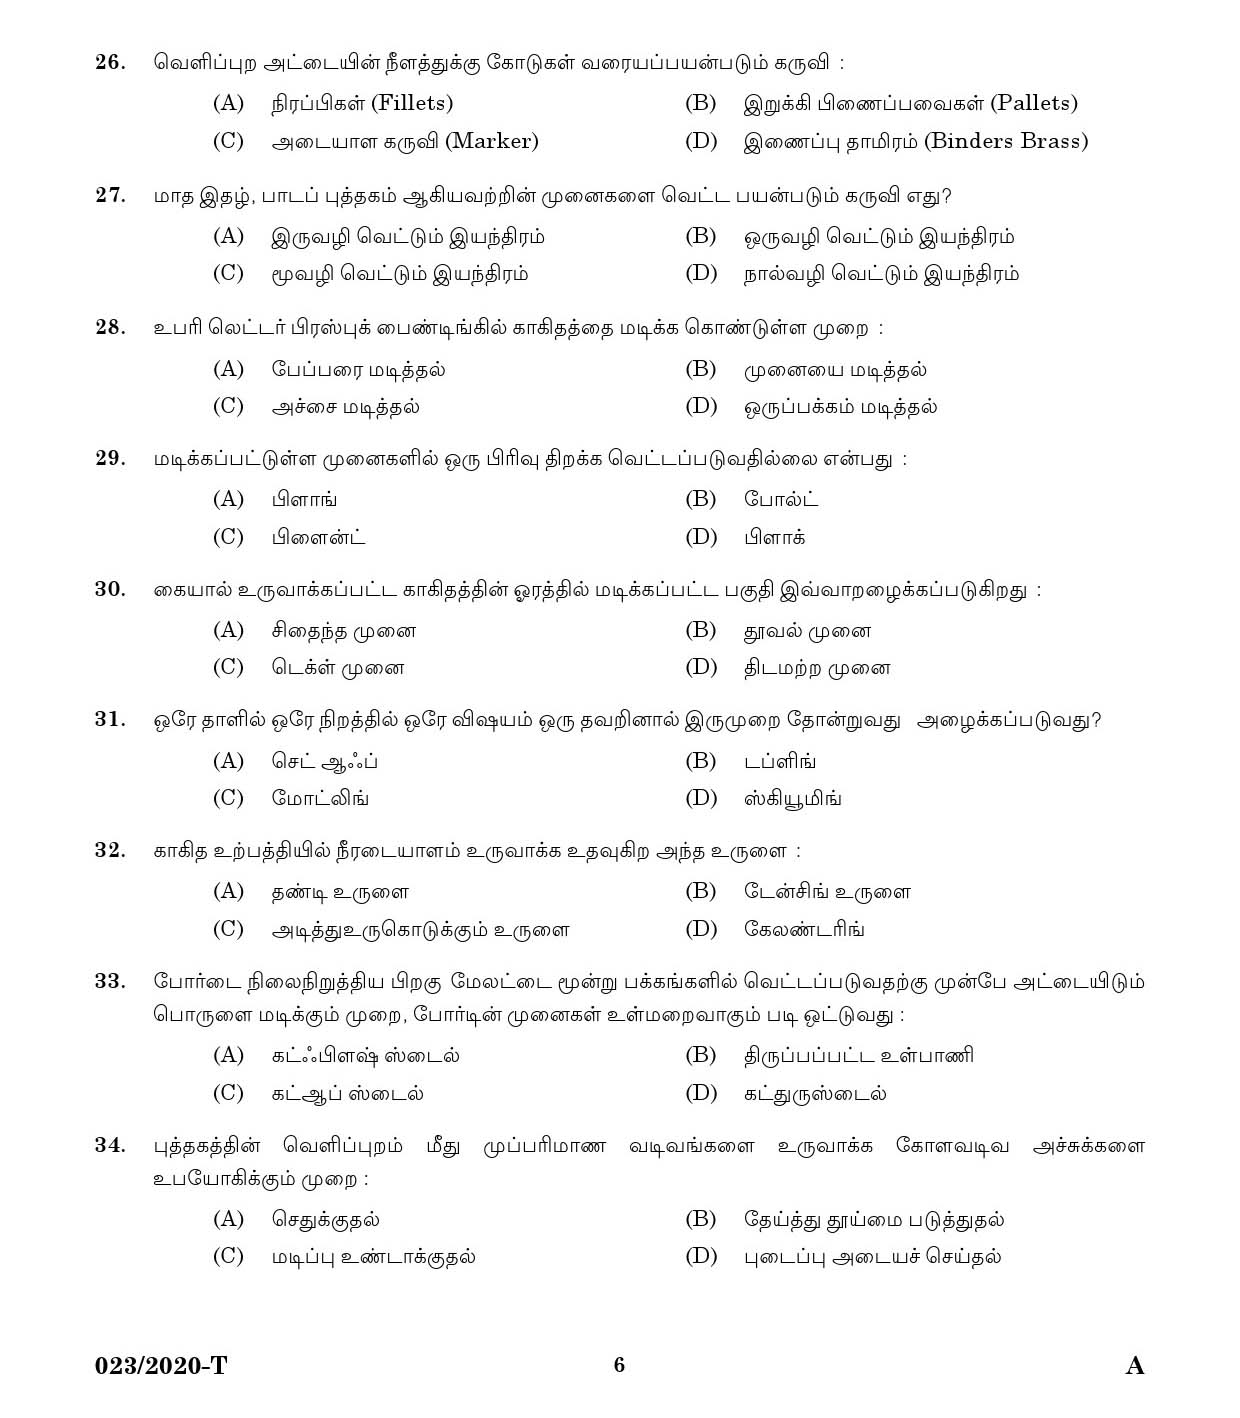 KPSC Binder Grade II Tamil Exam 2020 Code 0232020 T 4